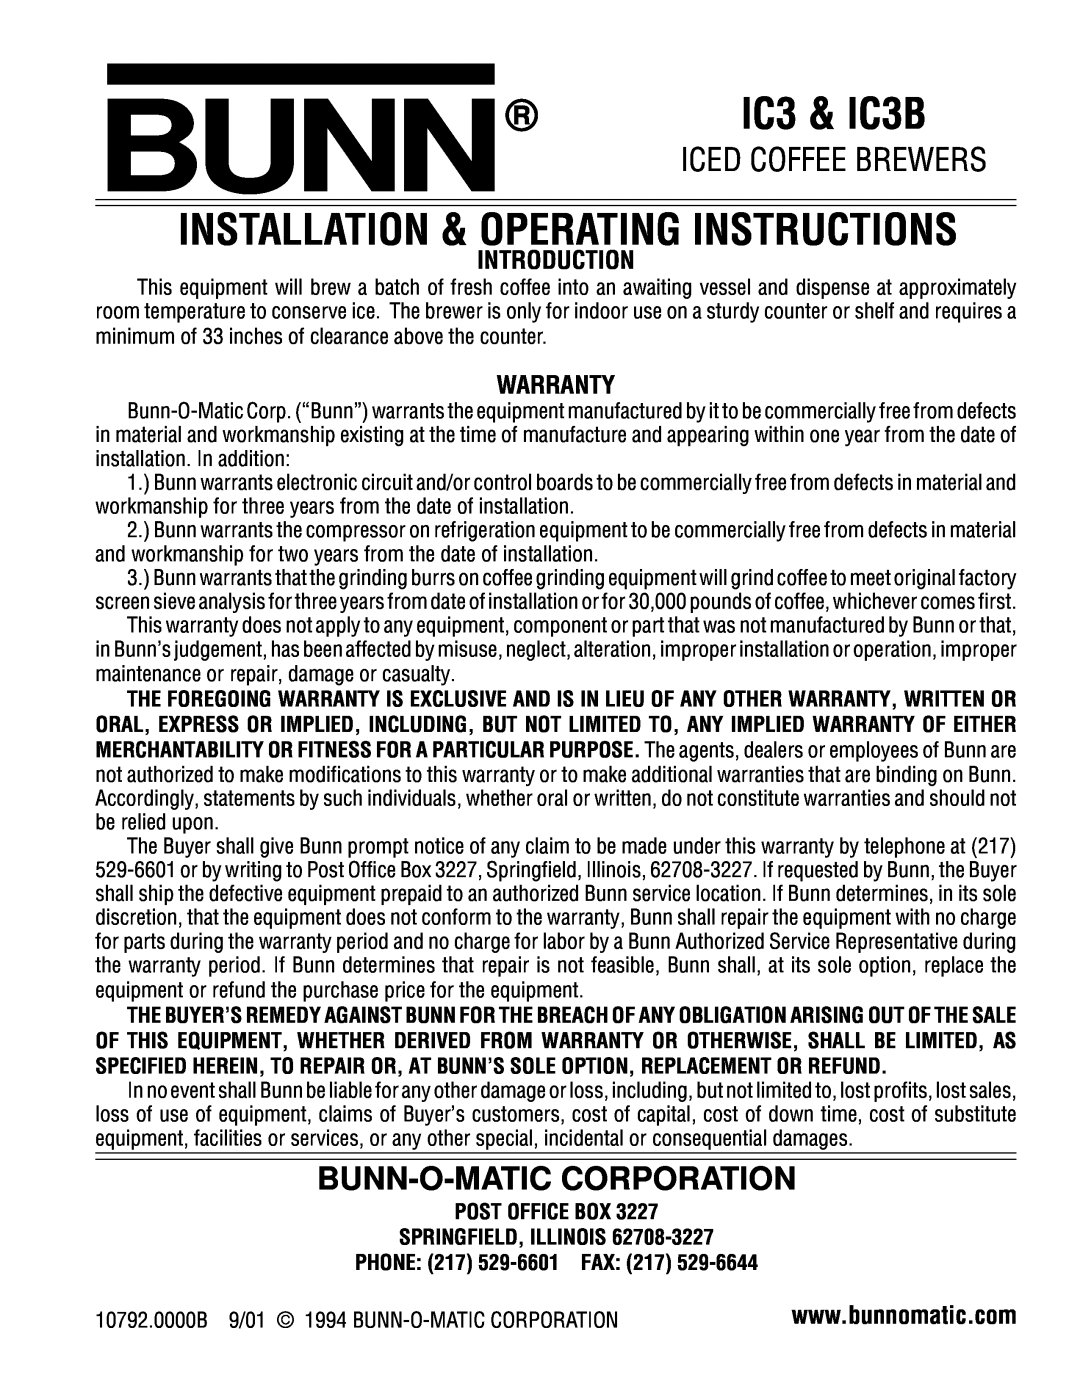 Bunn warranty Bunn-O-Maticcorporation, Introduction, Warranty, Post Office Box Springfield, Illinois, IC3 & IC3B 